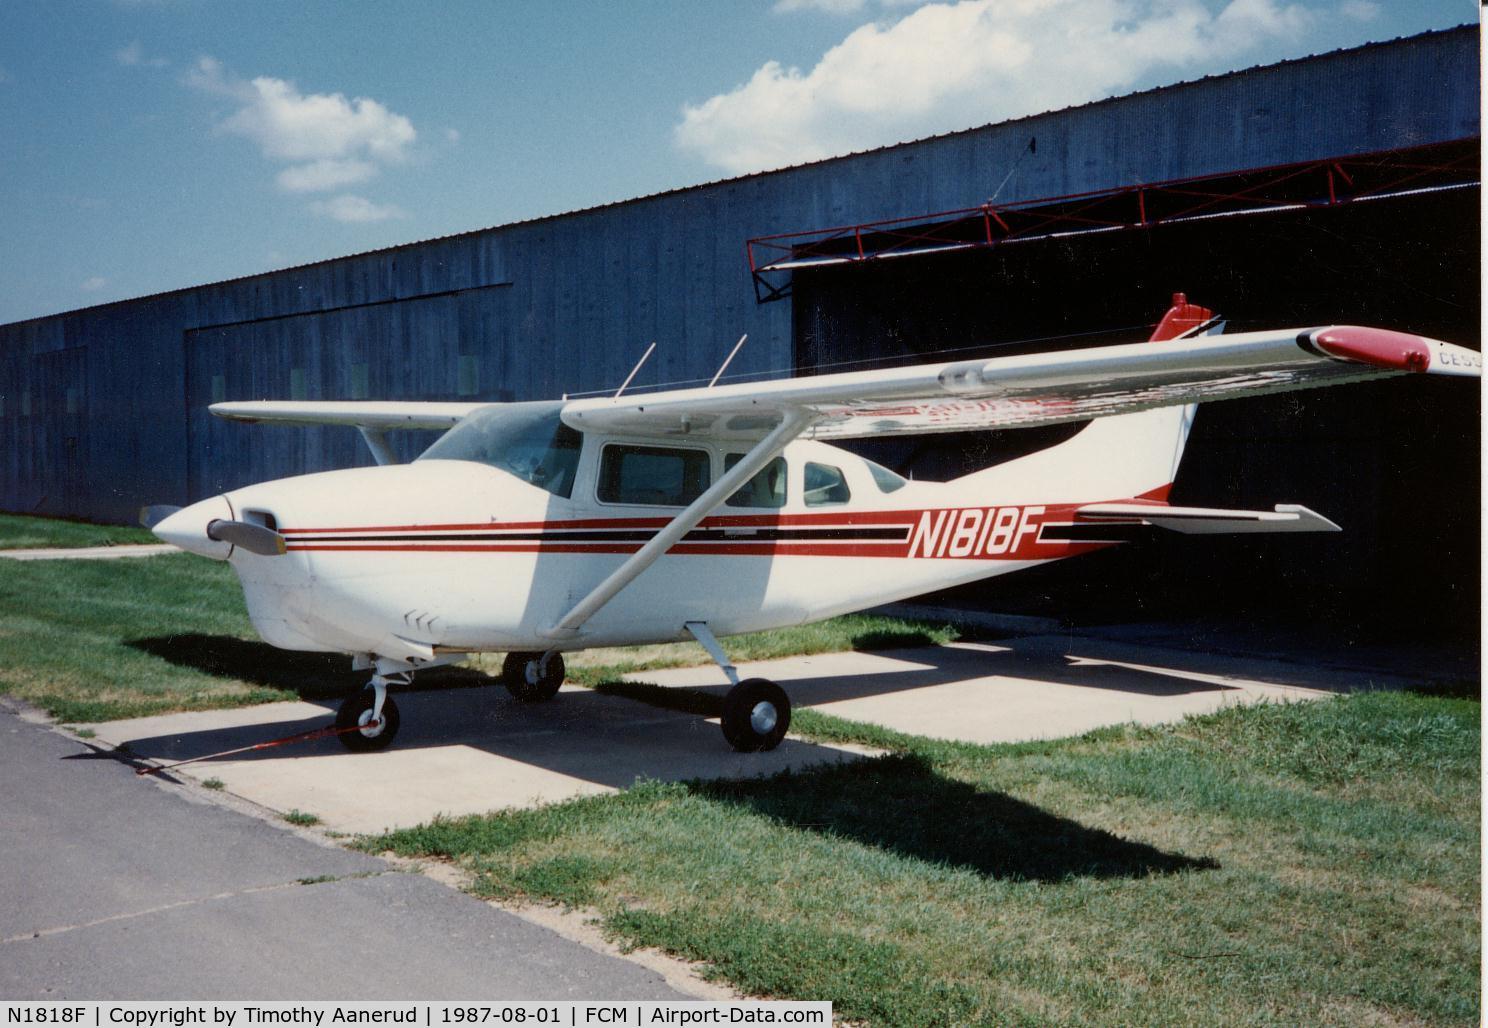 N1818F, 1965 Cessna 210F Centurion C/N 21058718, 1965 Cessna 210F Centurion, c/n 21058718, forsale in 1987